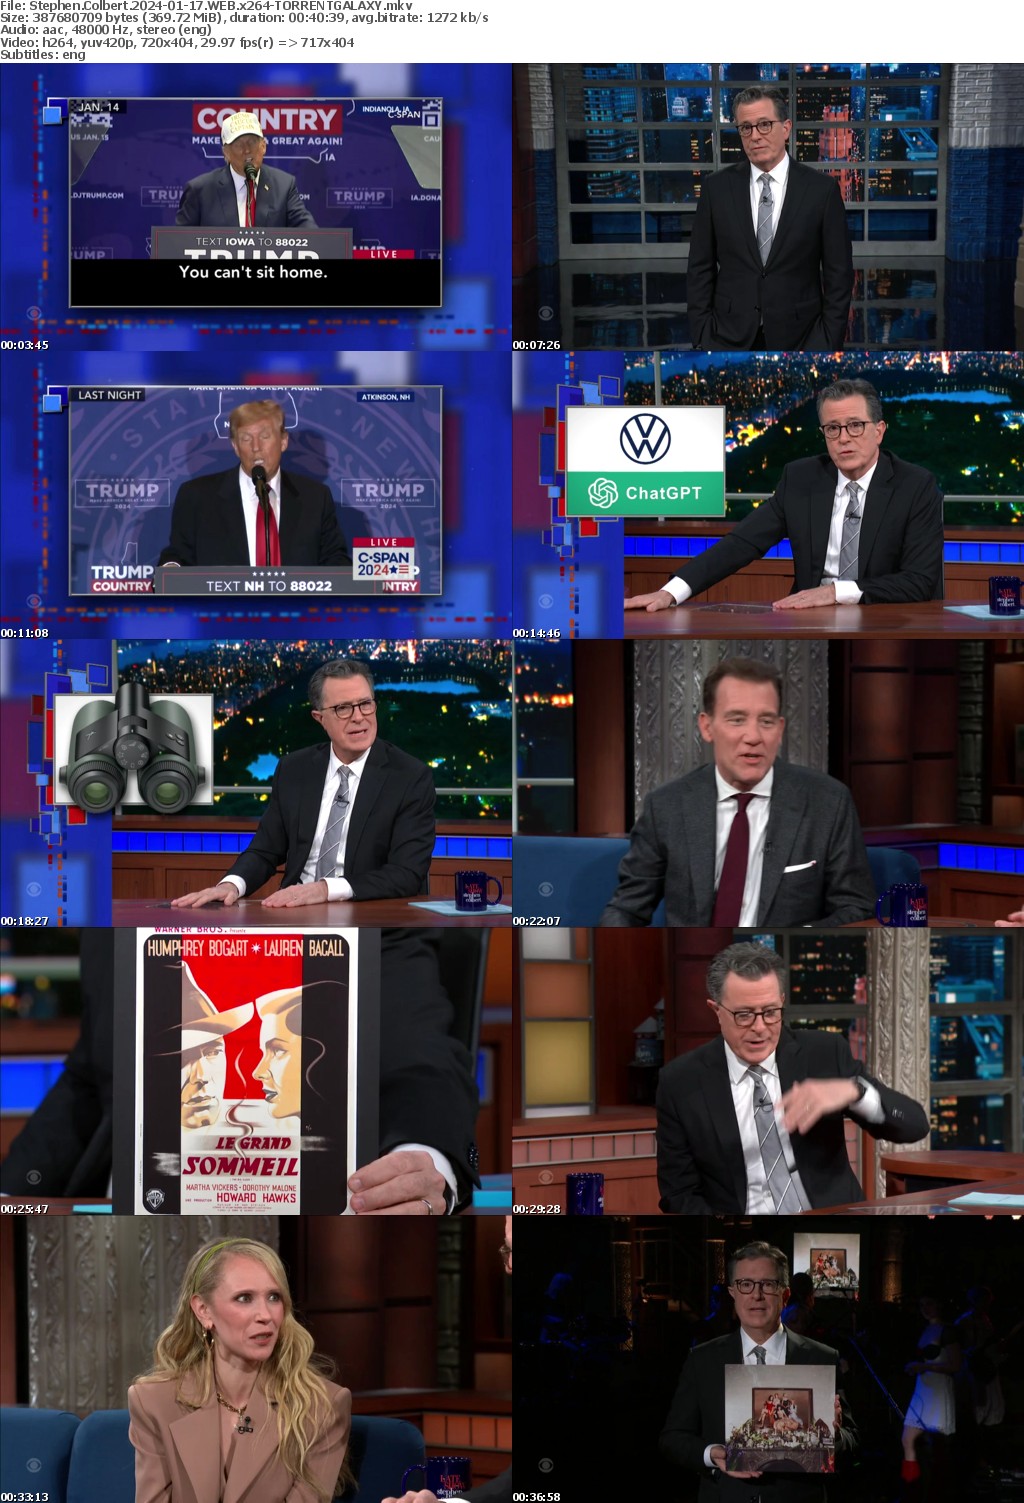 Stephen Colbert 2024-01-17 WEB x264-GALAXY